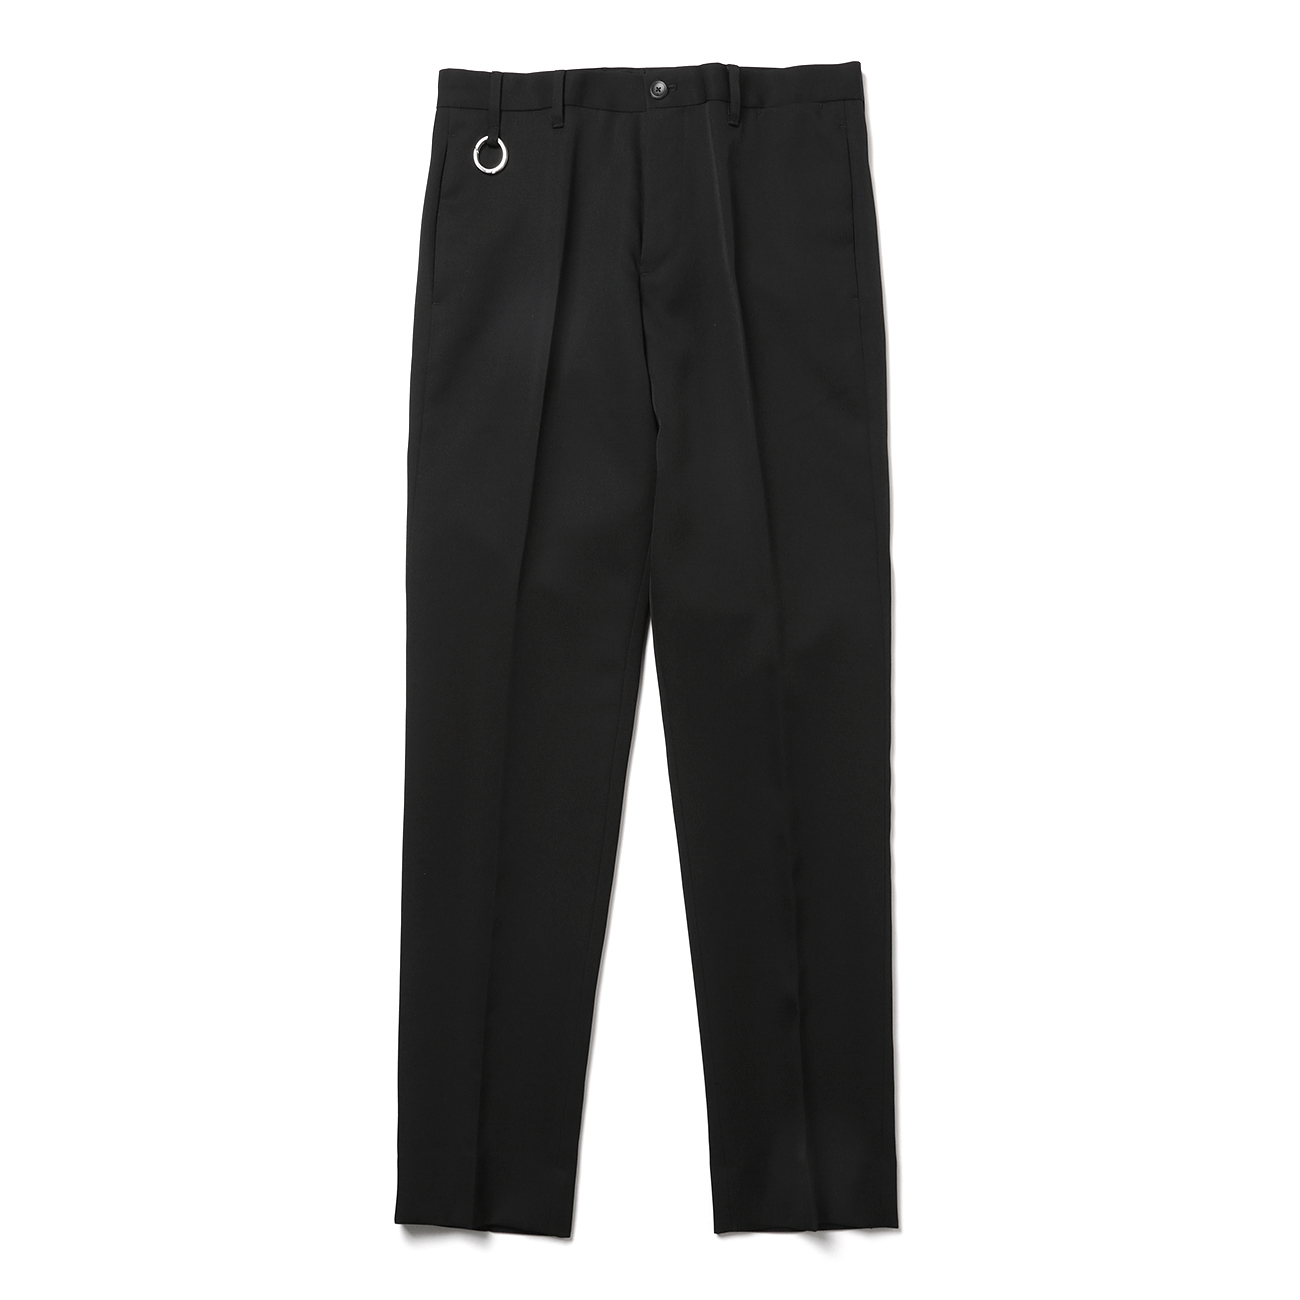 th products / ティーエイチプロダクツ | LOWITT / Slim Tailored Pants - Black | 通販 -  正規取扱店 | COLLECT STORE / コレクトストア